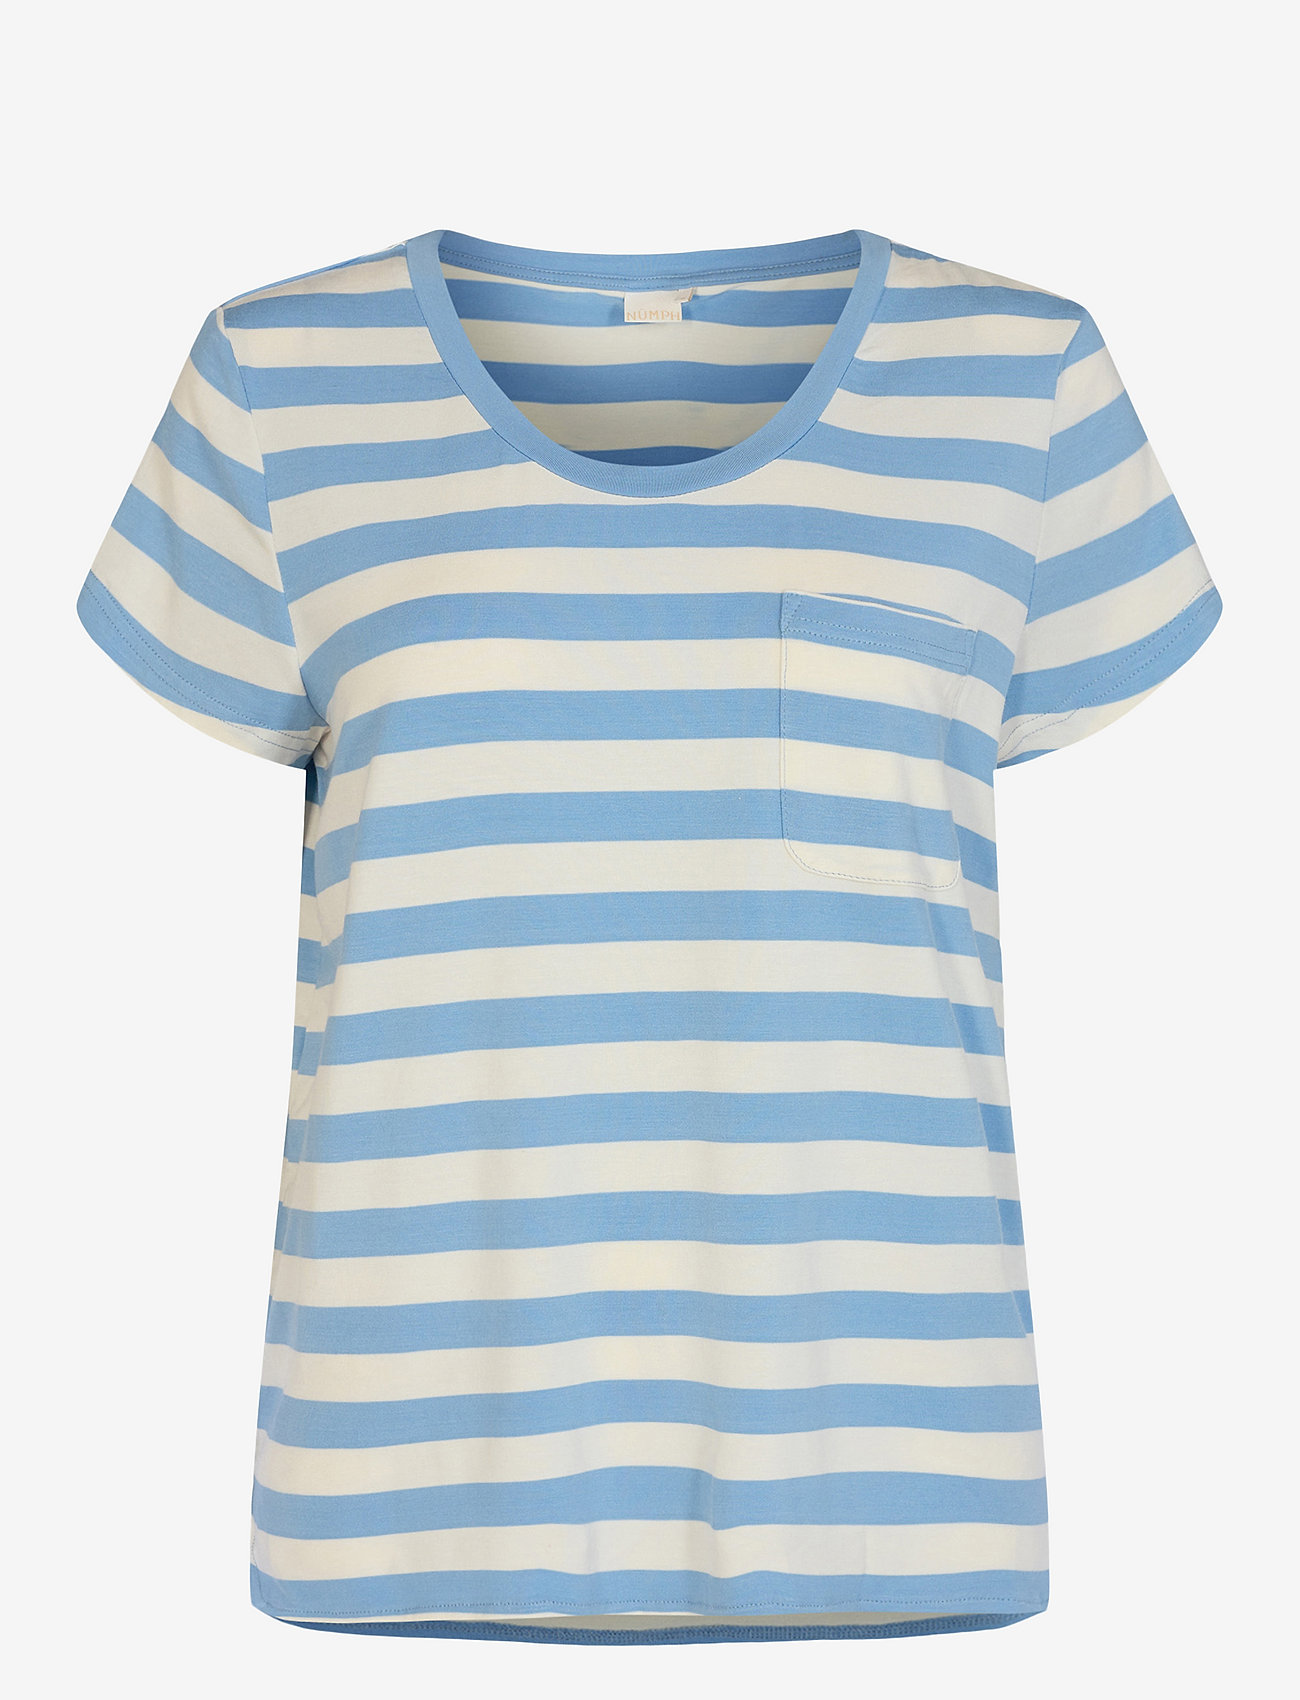 Nümph - NUBOWIE T-SHIRT - NOOS - t-shirt & tops - della robbia blue - 0